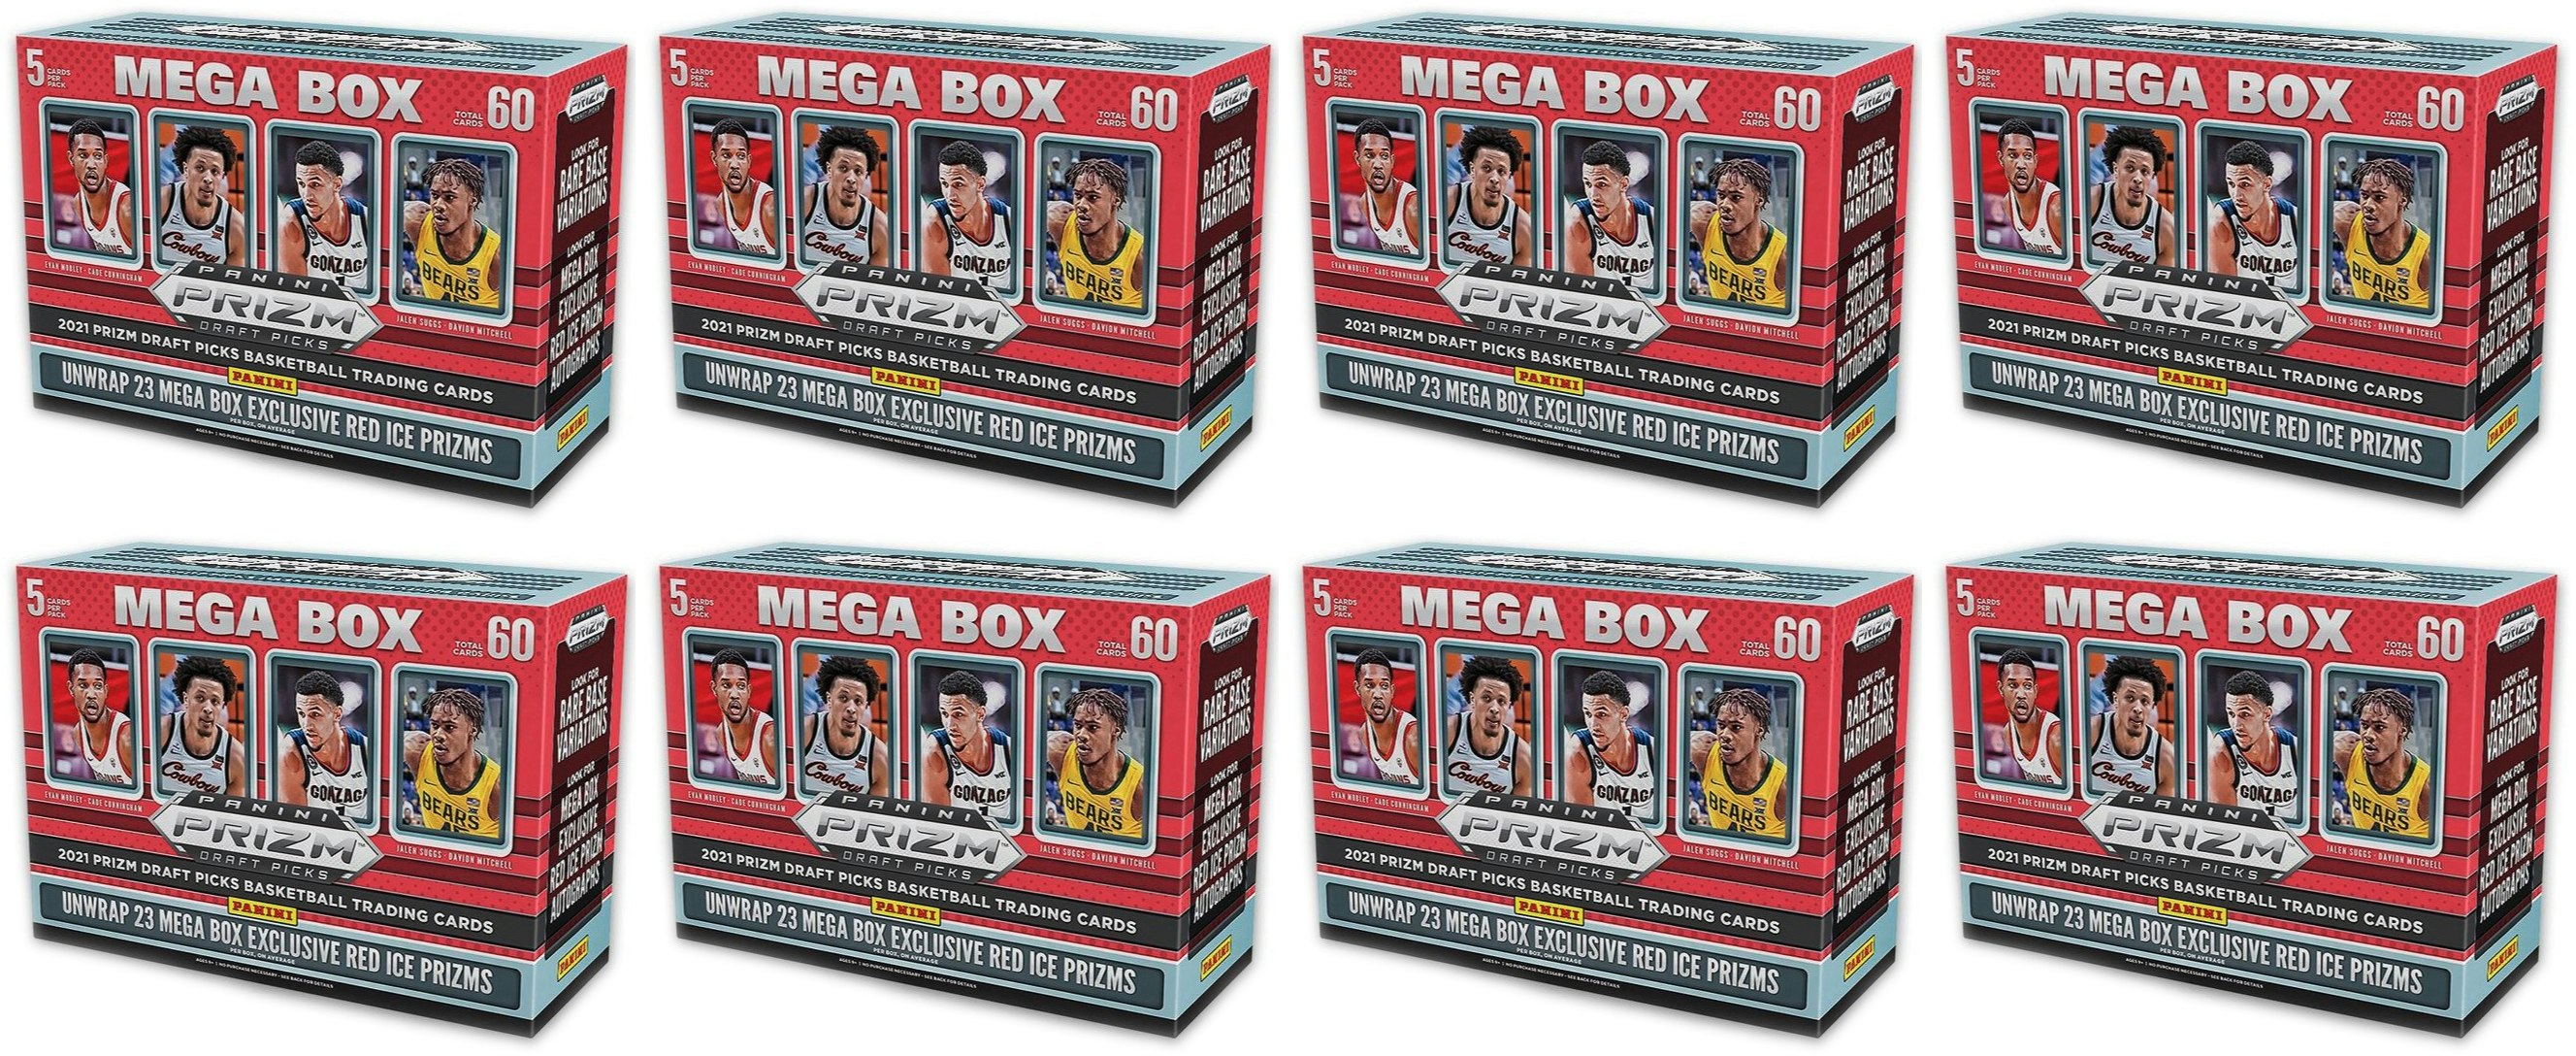 2021 Panini Prizm Draft Picks Basketball Mega Box